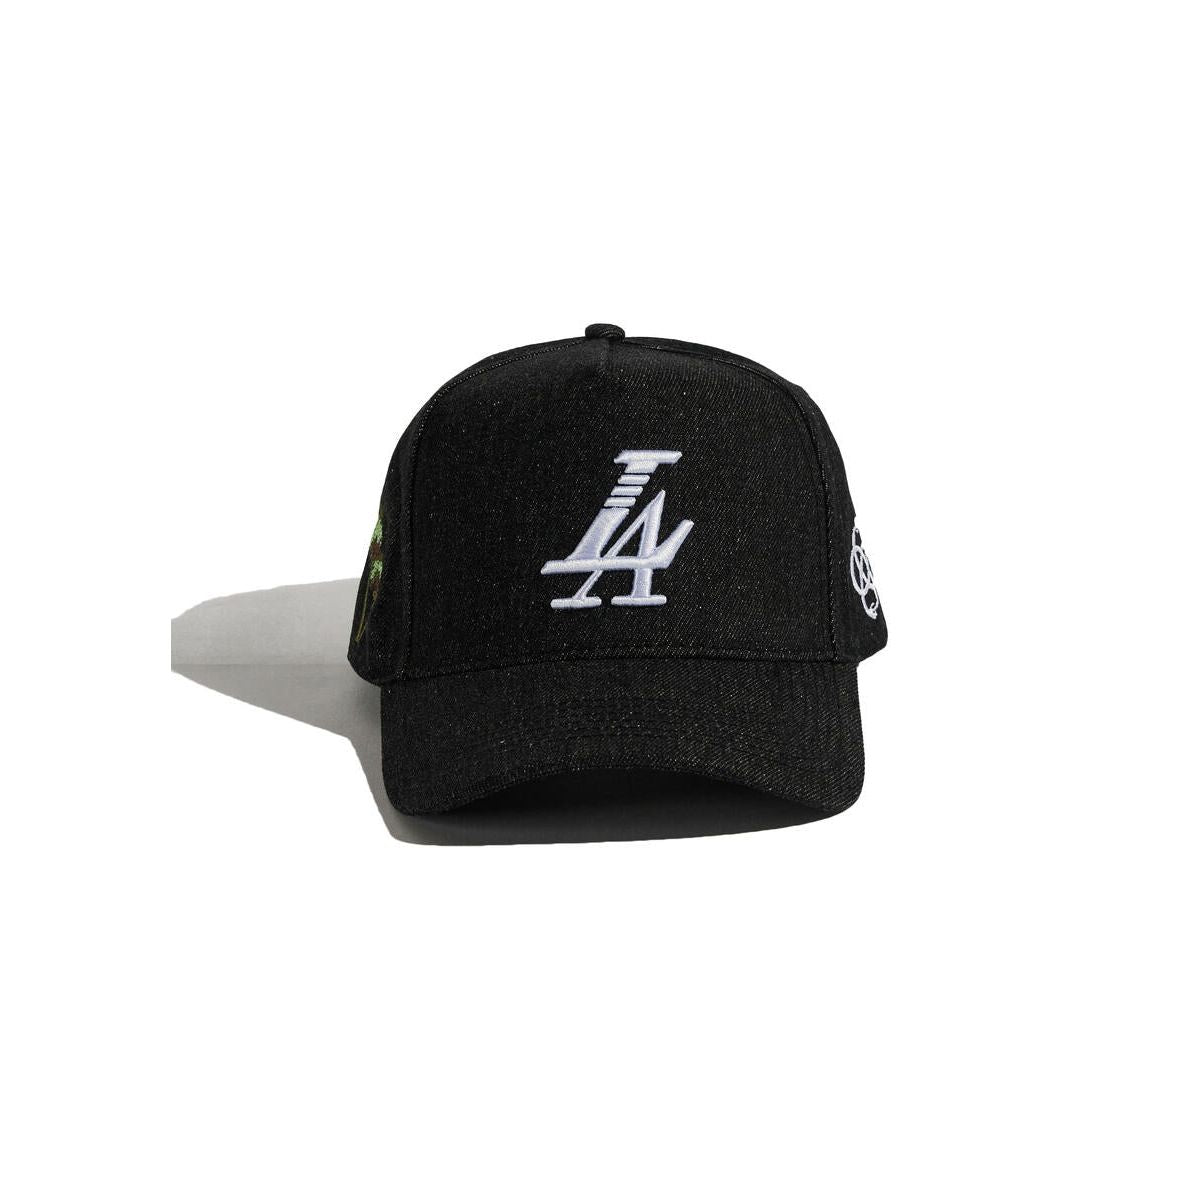 Reference "Paradise LA" Snapback Hat - Black Denim